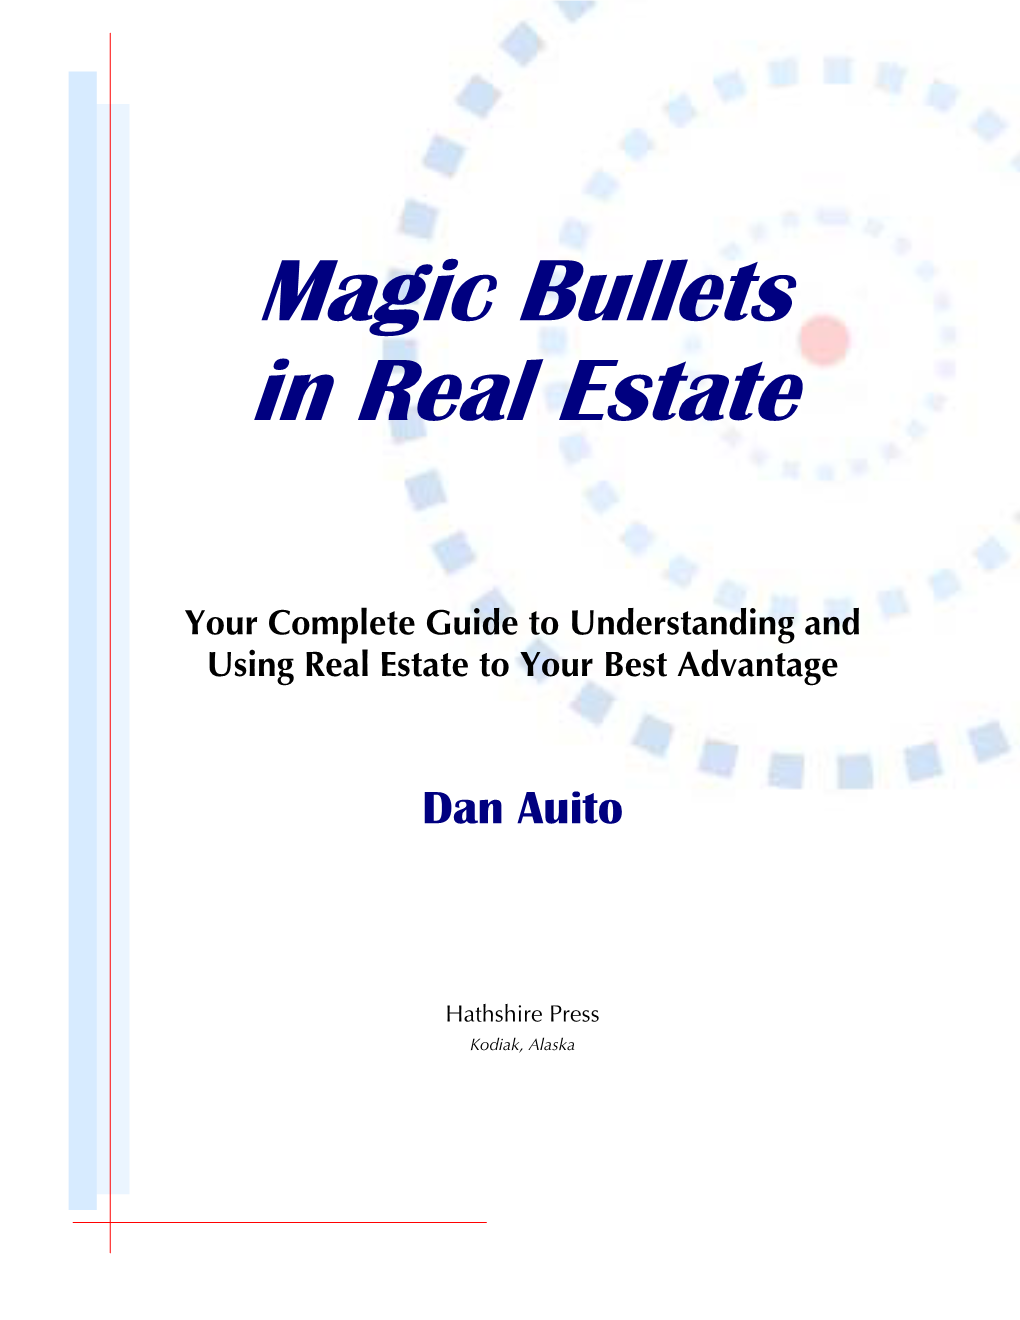 Magic Bullets in Real Estate